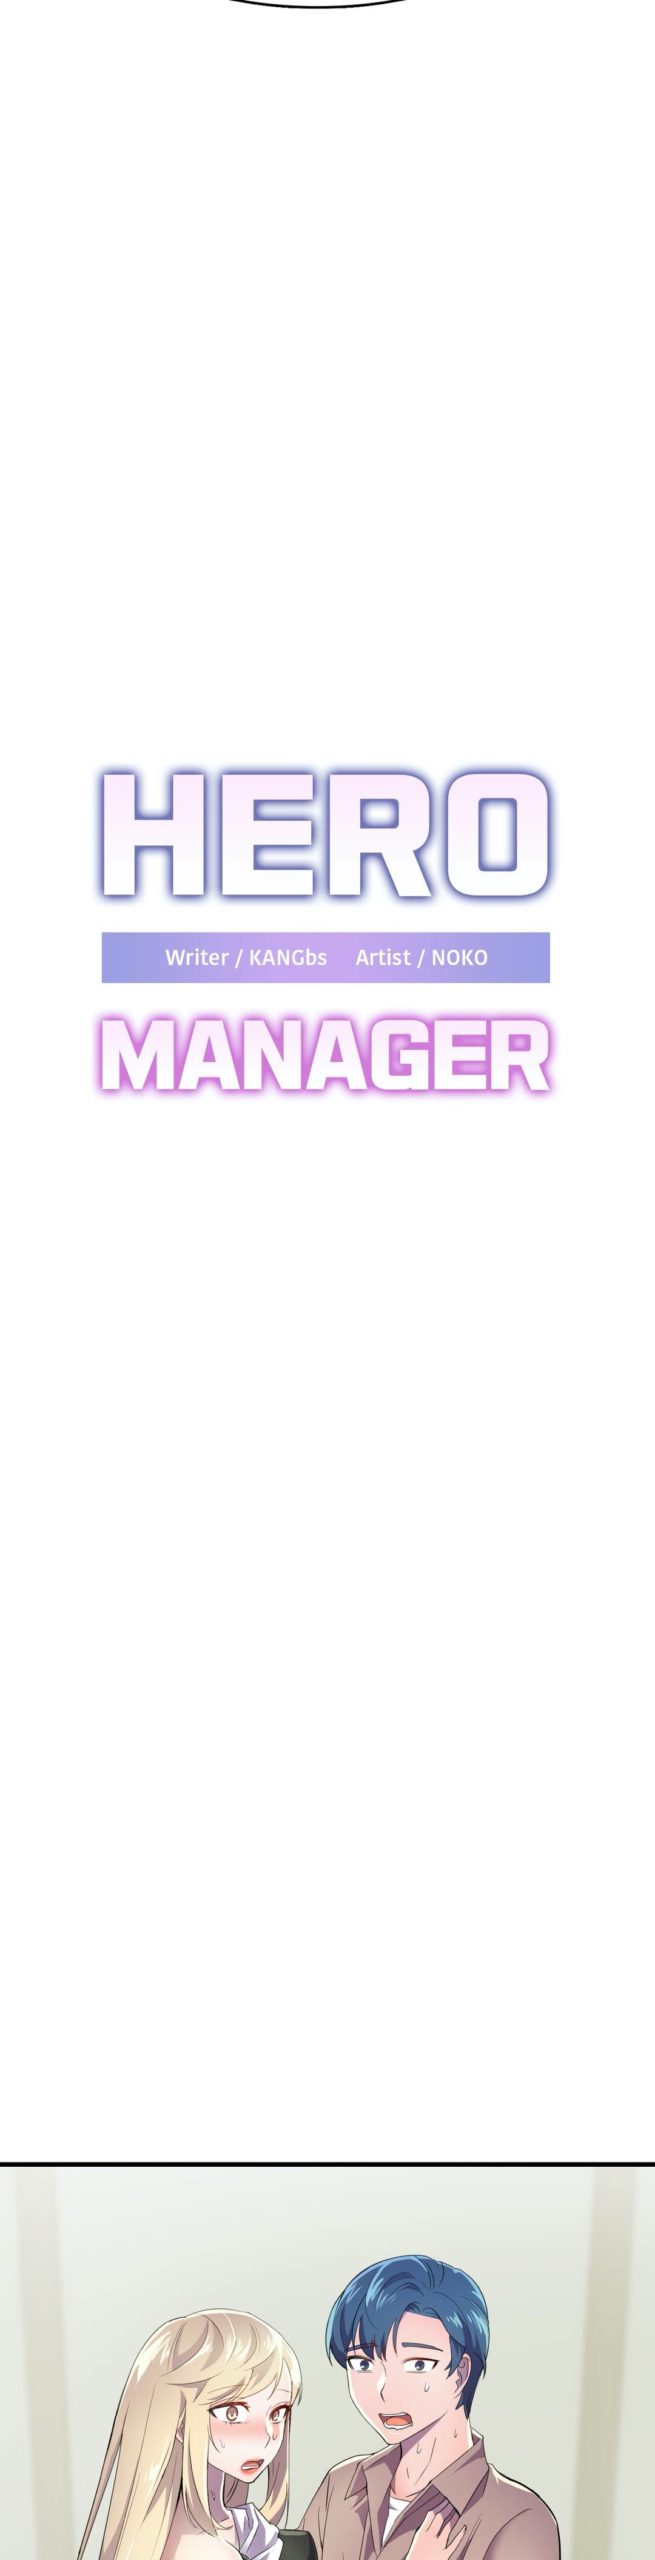 Hero Manager 19 (3)